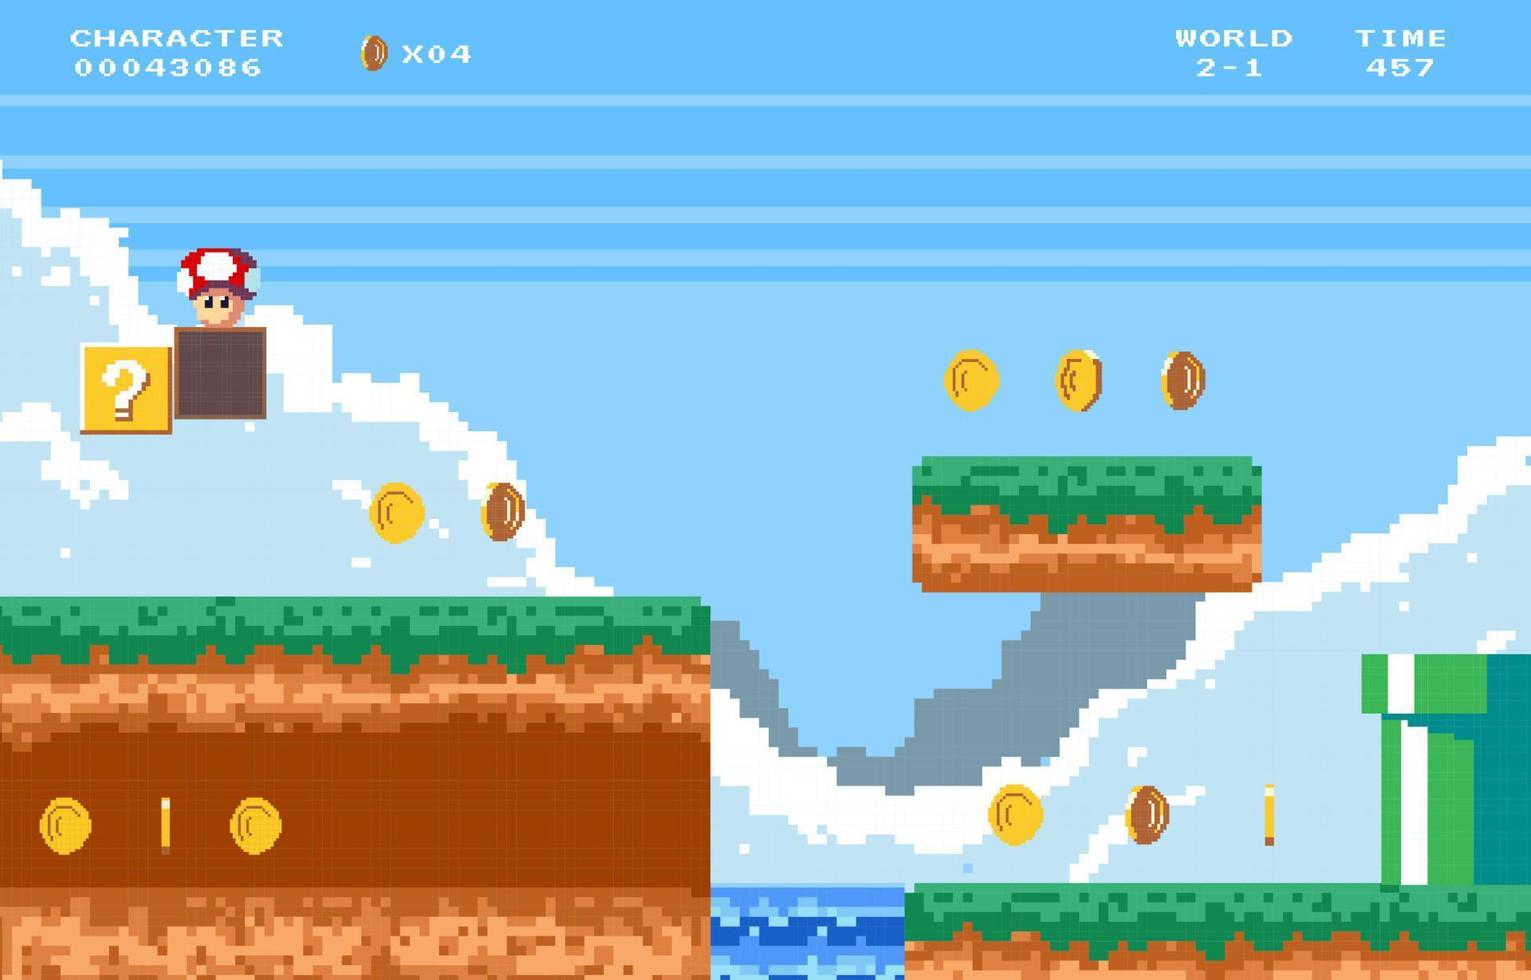 Pixelated Scenery of Arcade Game Background vector